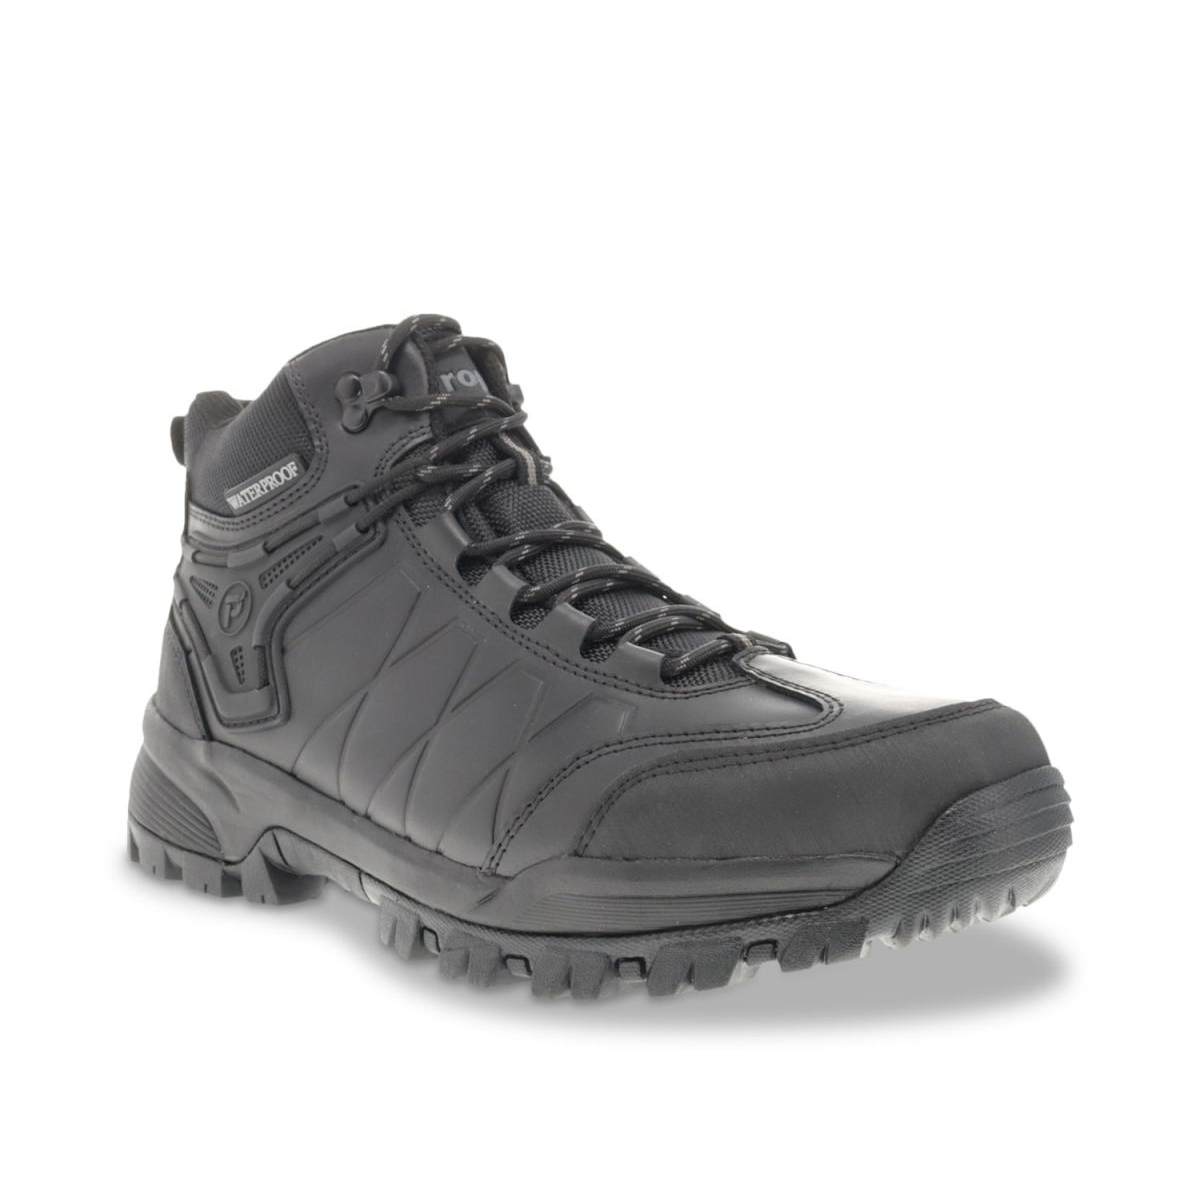 Propet Men's Ridge Walker Force Hiking Boots Black - MBA052LBLK BLACK - BLACK, 9.5 Wide